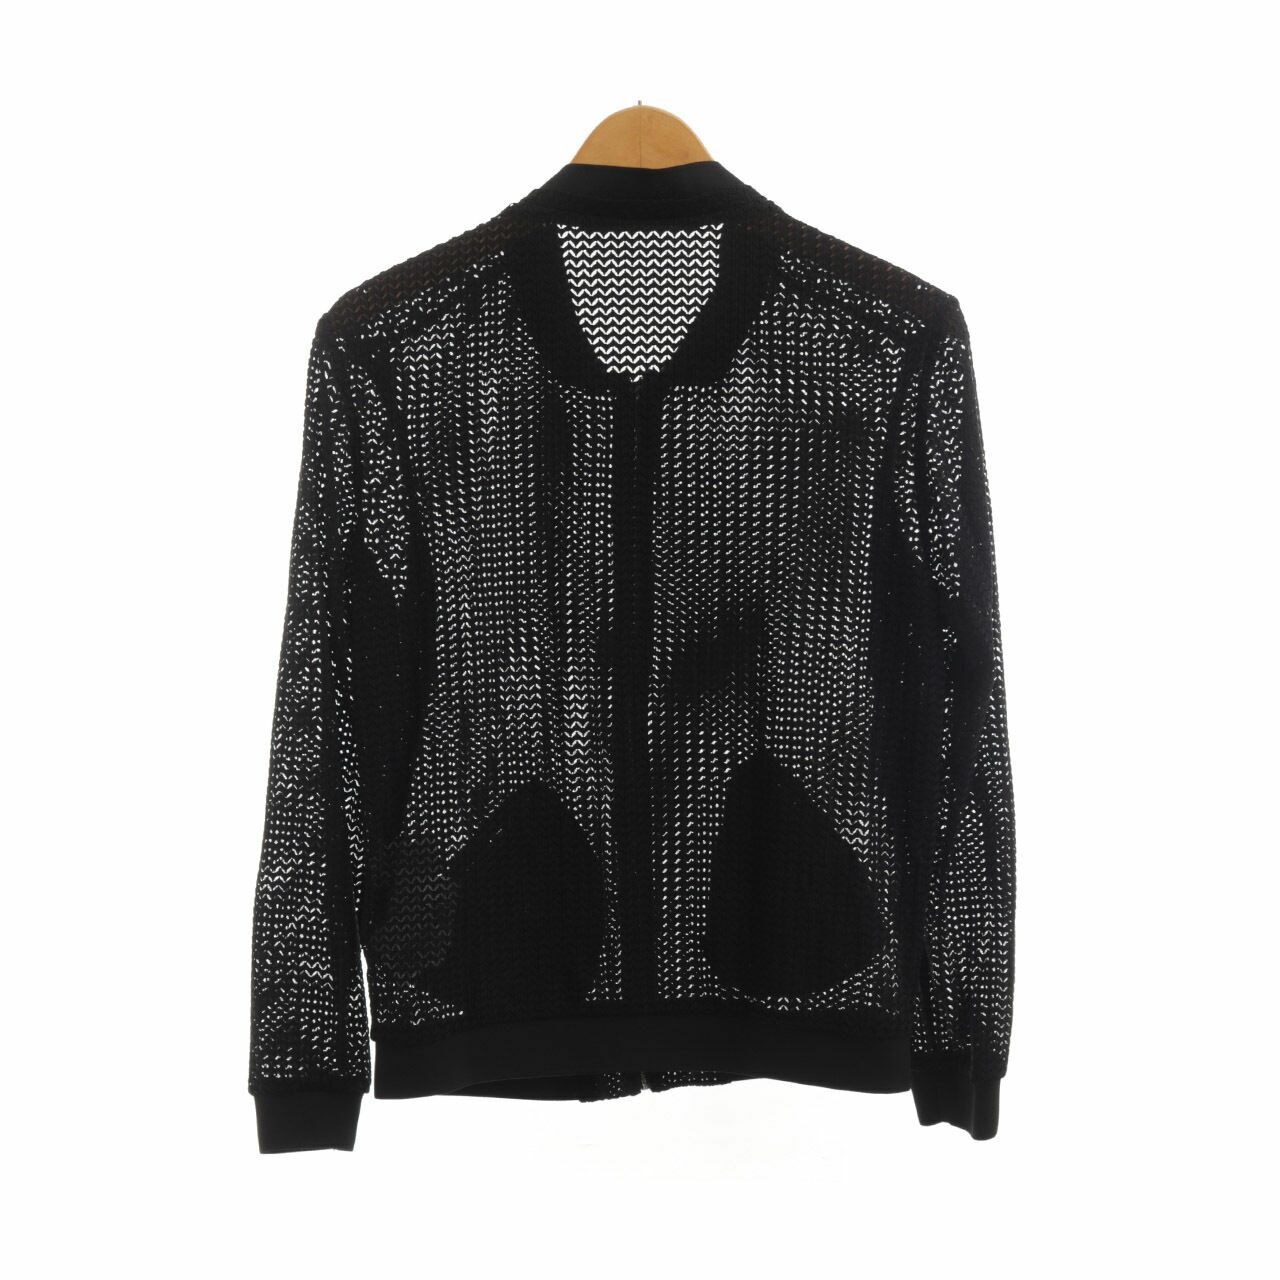 Zara Black Zipper Jacket